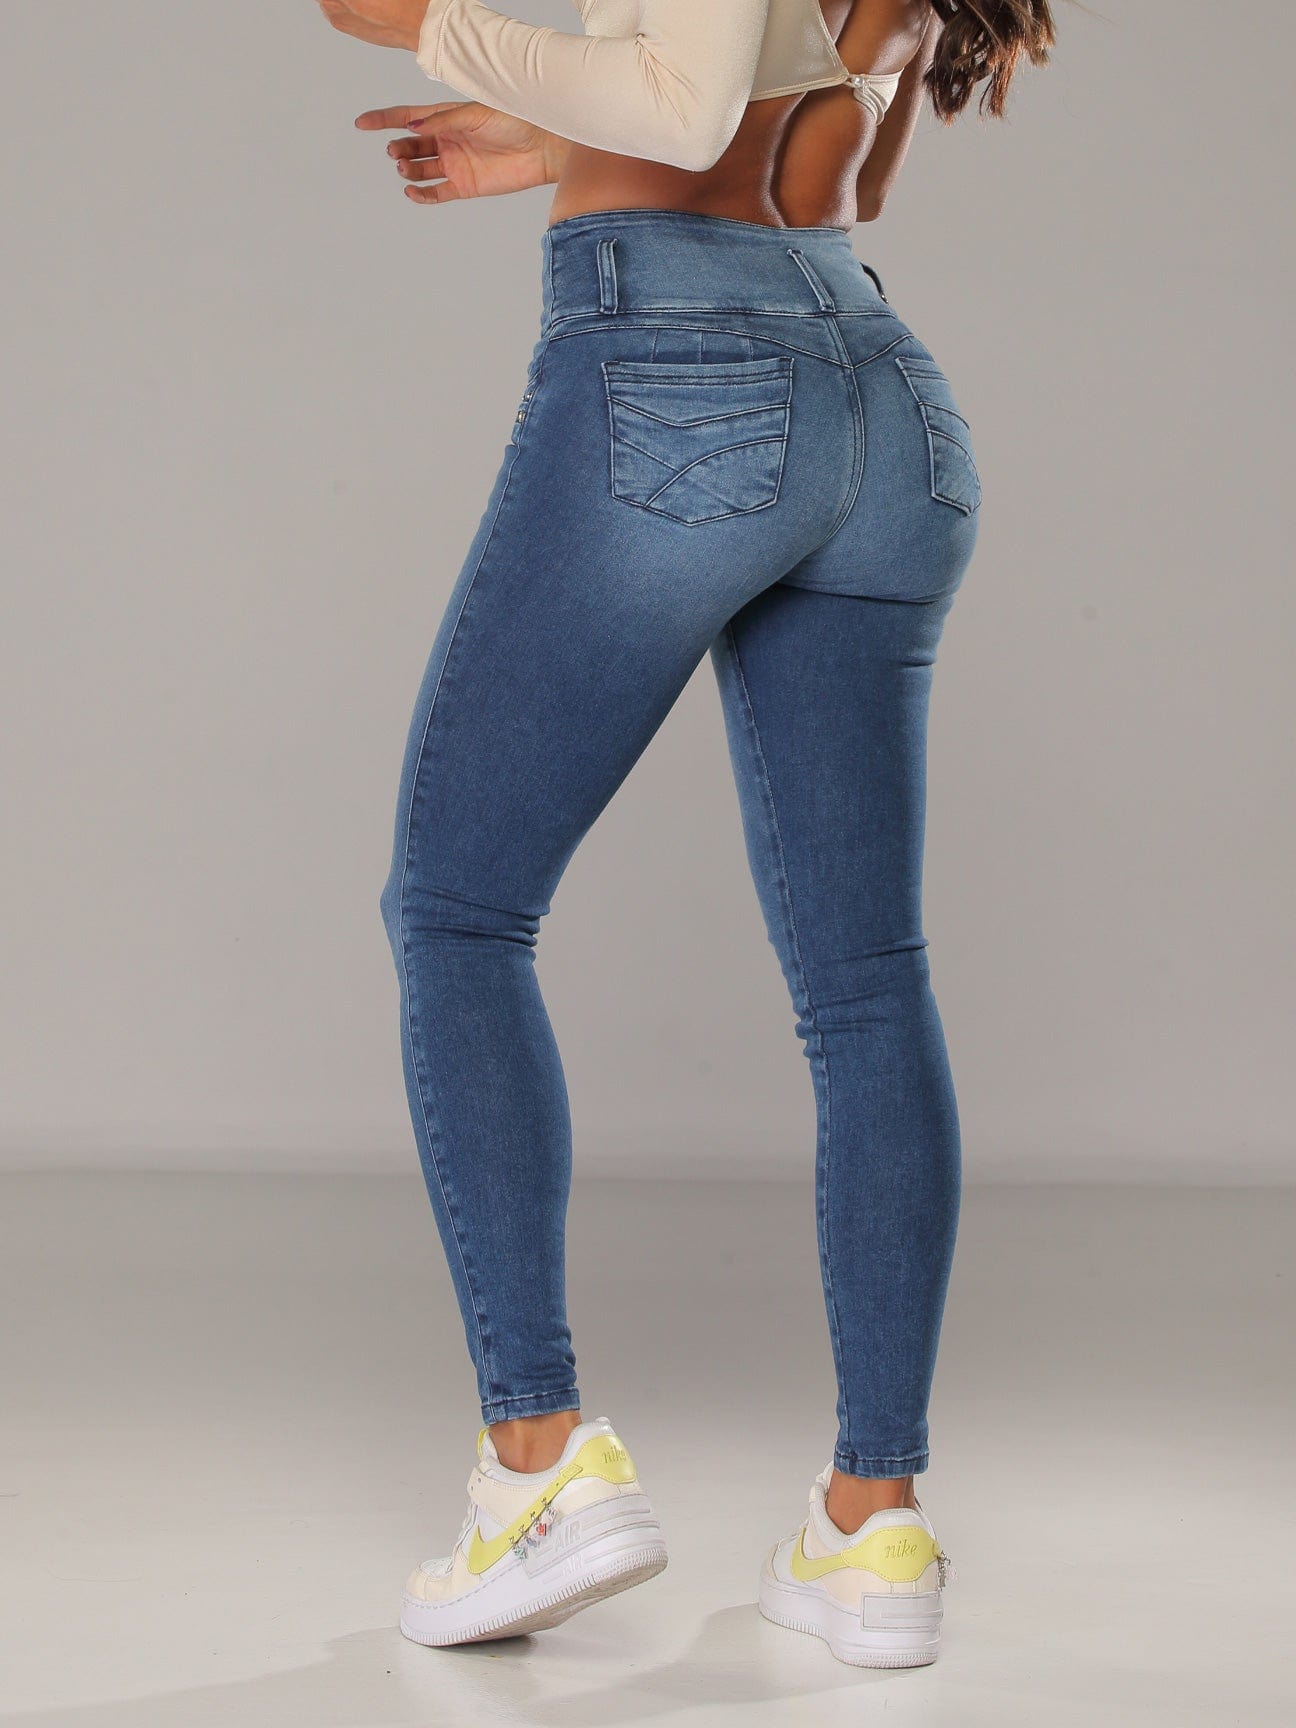 Brazil Butt Lift Jeans, Women Distressed Denim RHERO Fashion Jeans